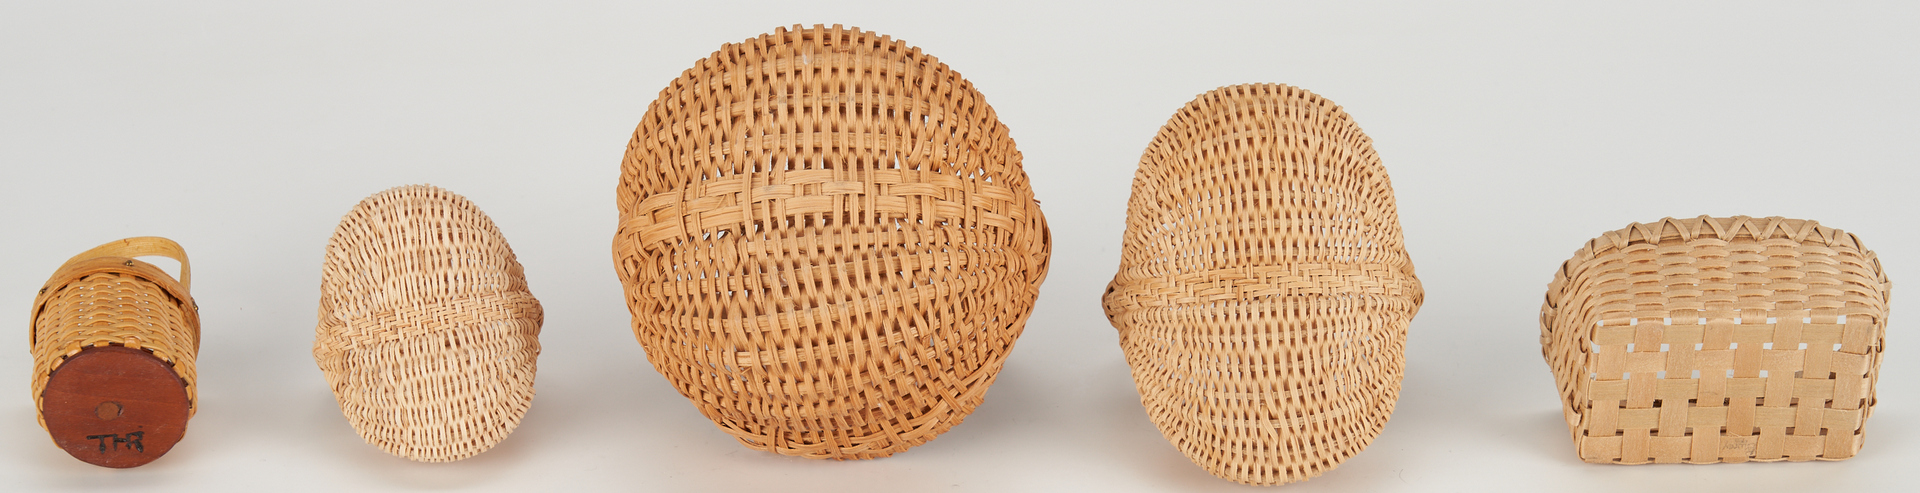 Lot 142: 10 Miniature Southern Baskets, incl. George McCollum